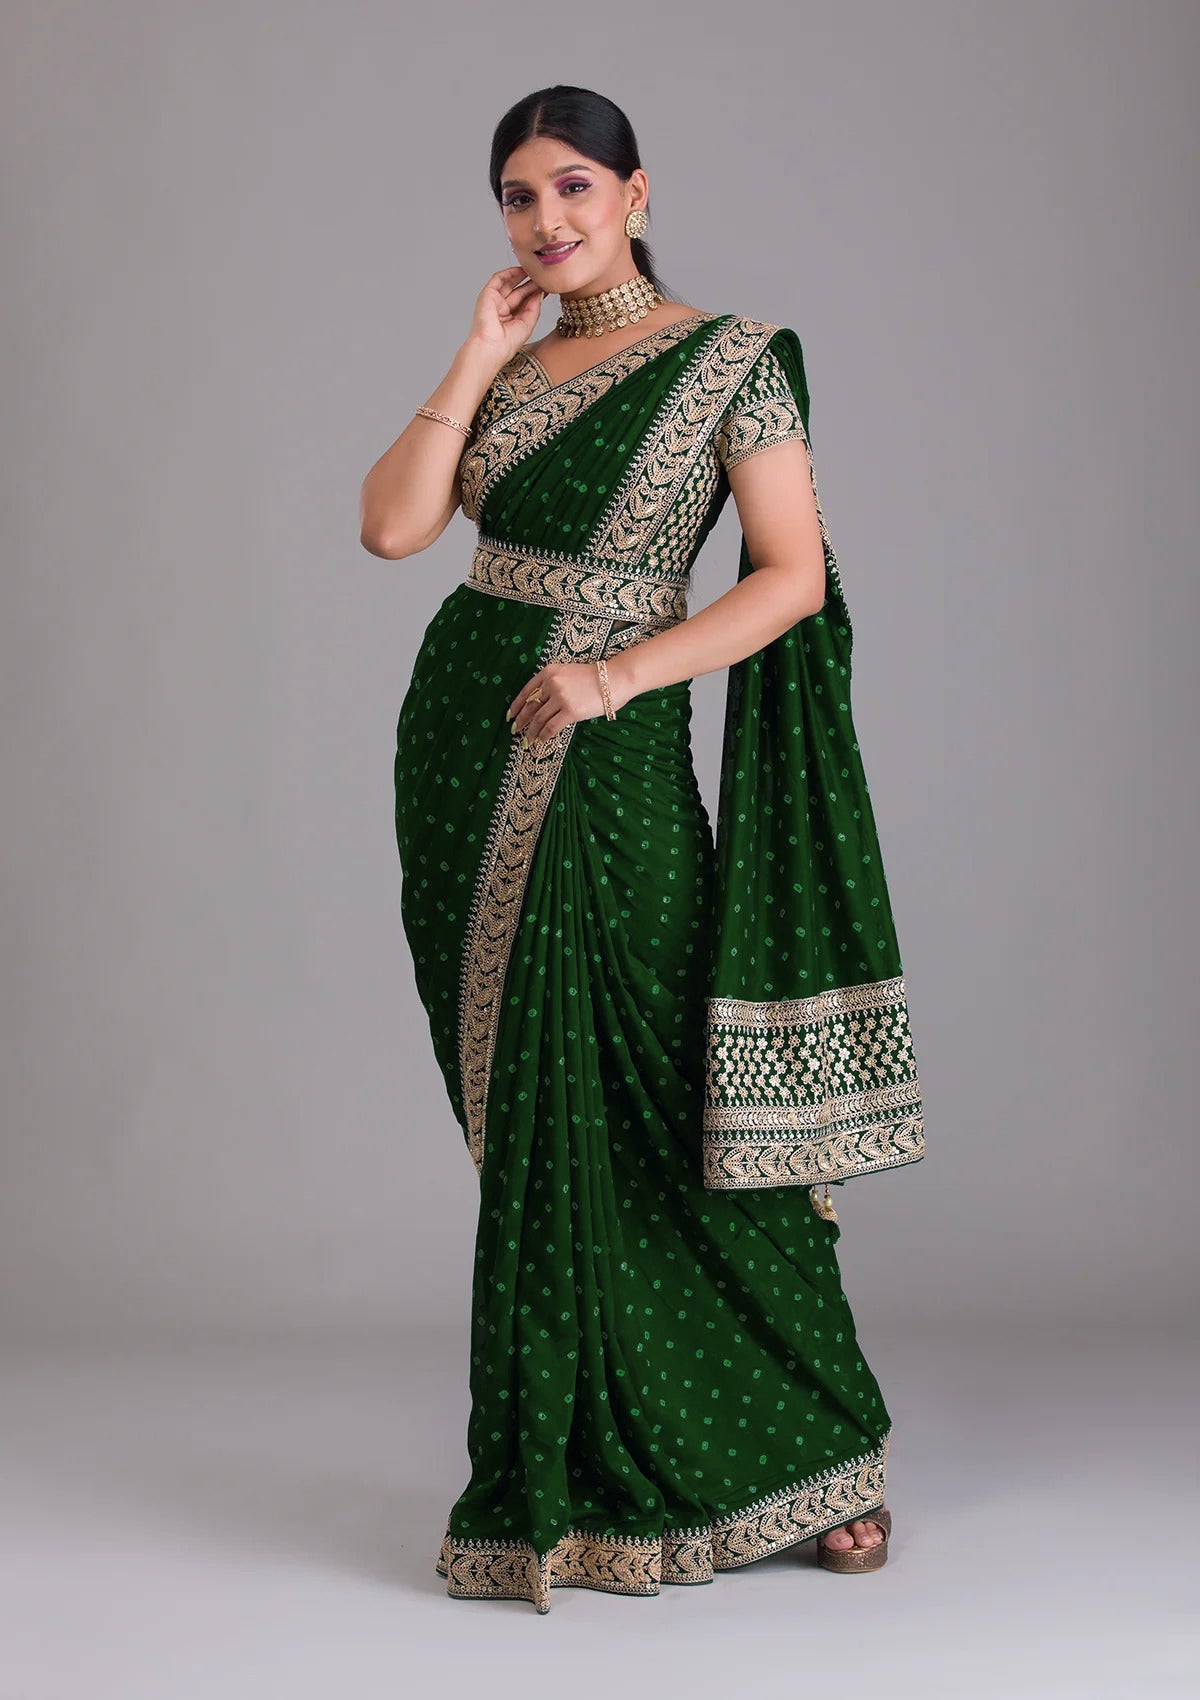 Green Saree - Buy Latest Green Colour Sarees Online